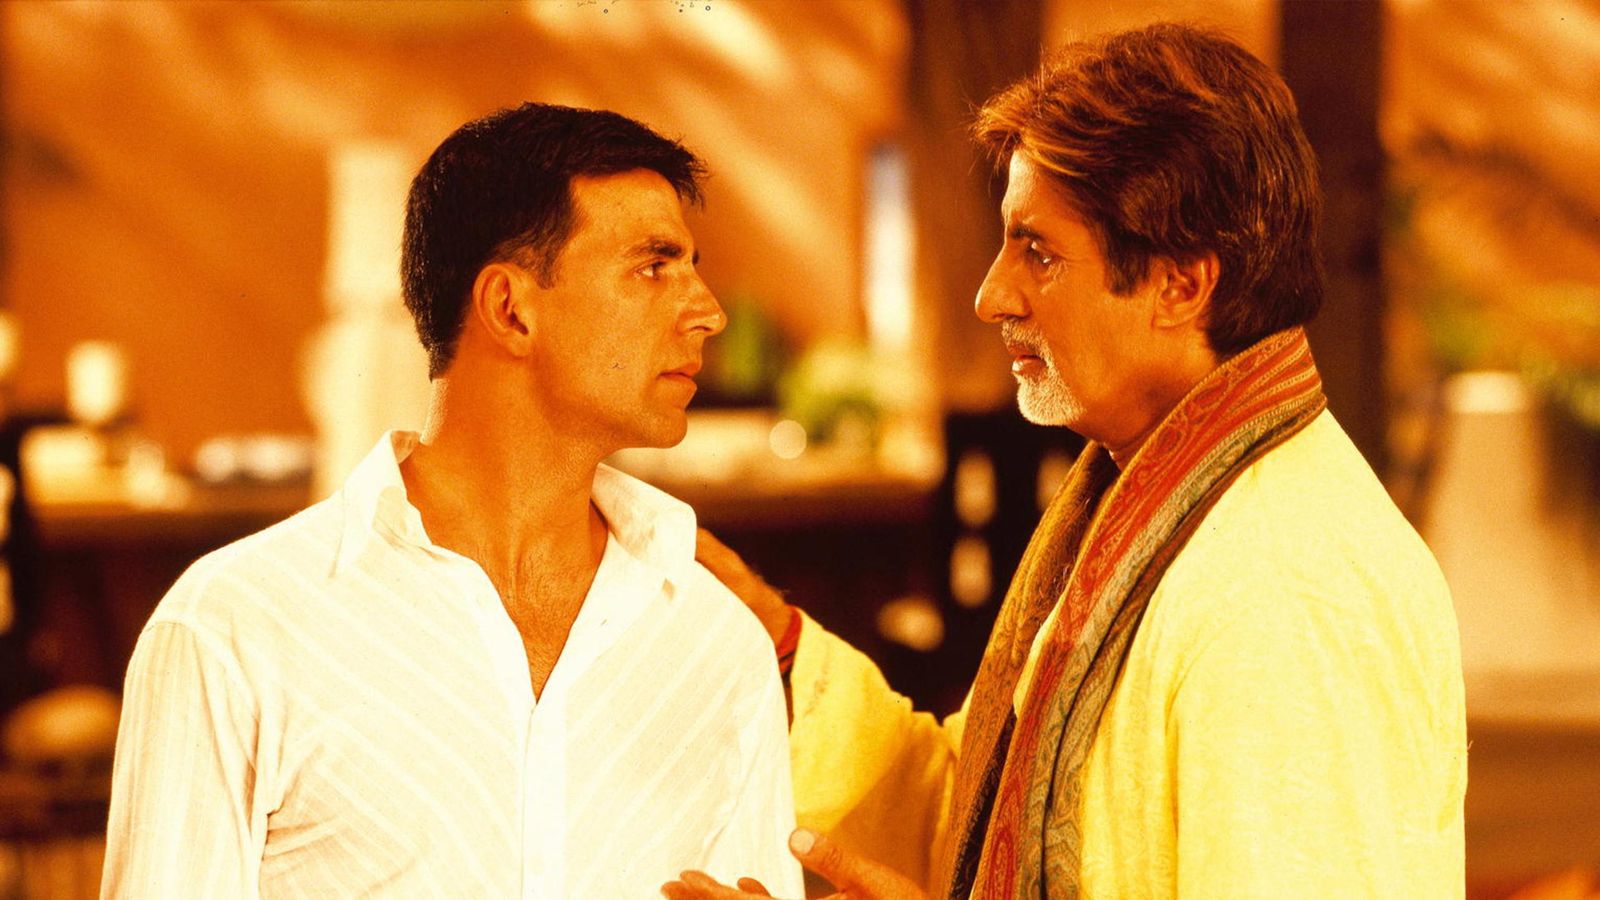 Amitabh Bachchan & Akshay Kumar Were Willing To Waive Their Fee For Waqt Reveals Producer Vipul Amrutlal Shah